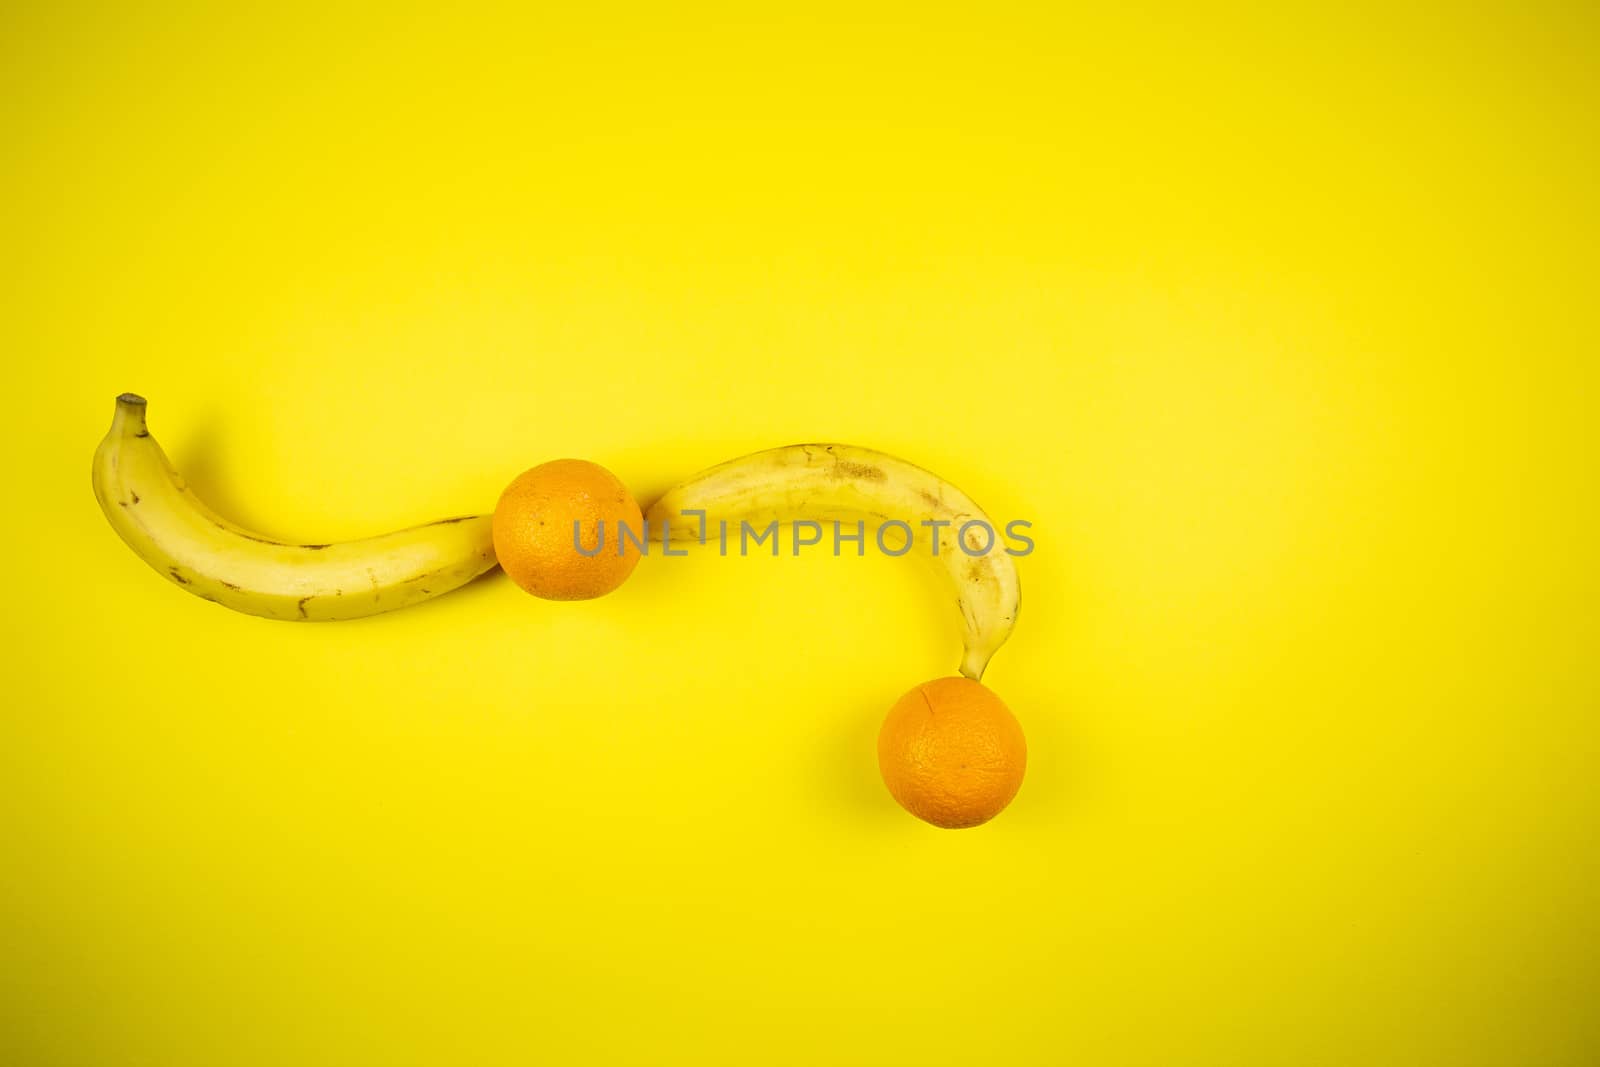 Fruit banana and orange on a yellow background, fruits